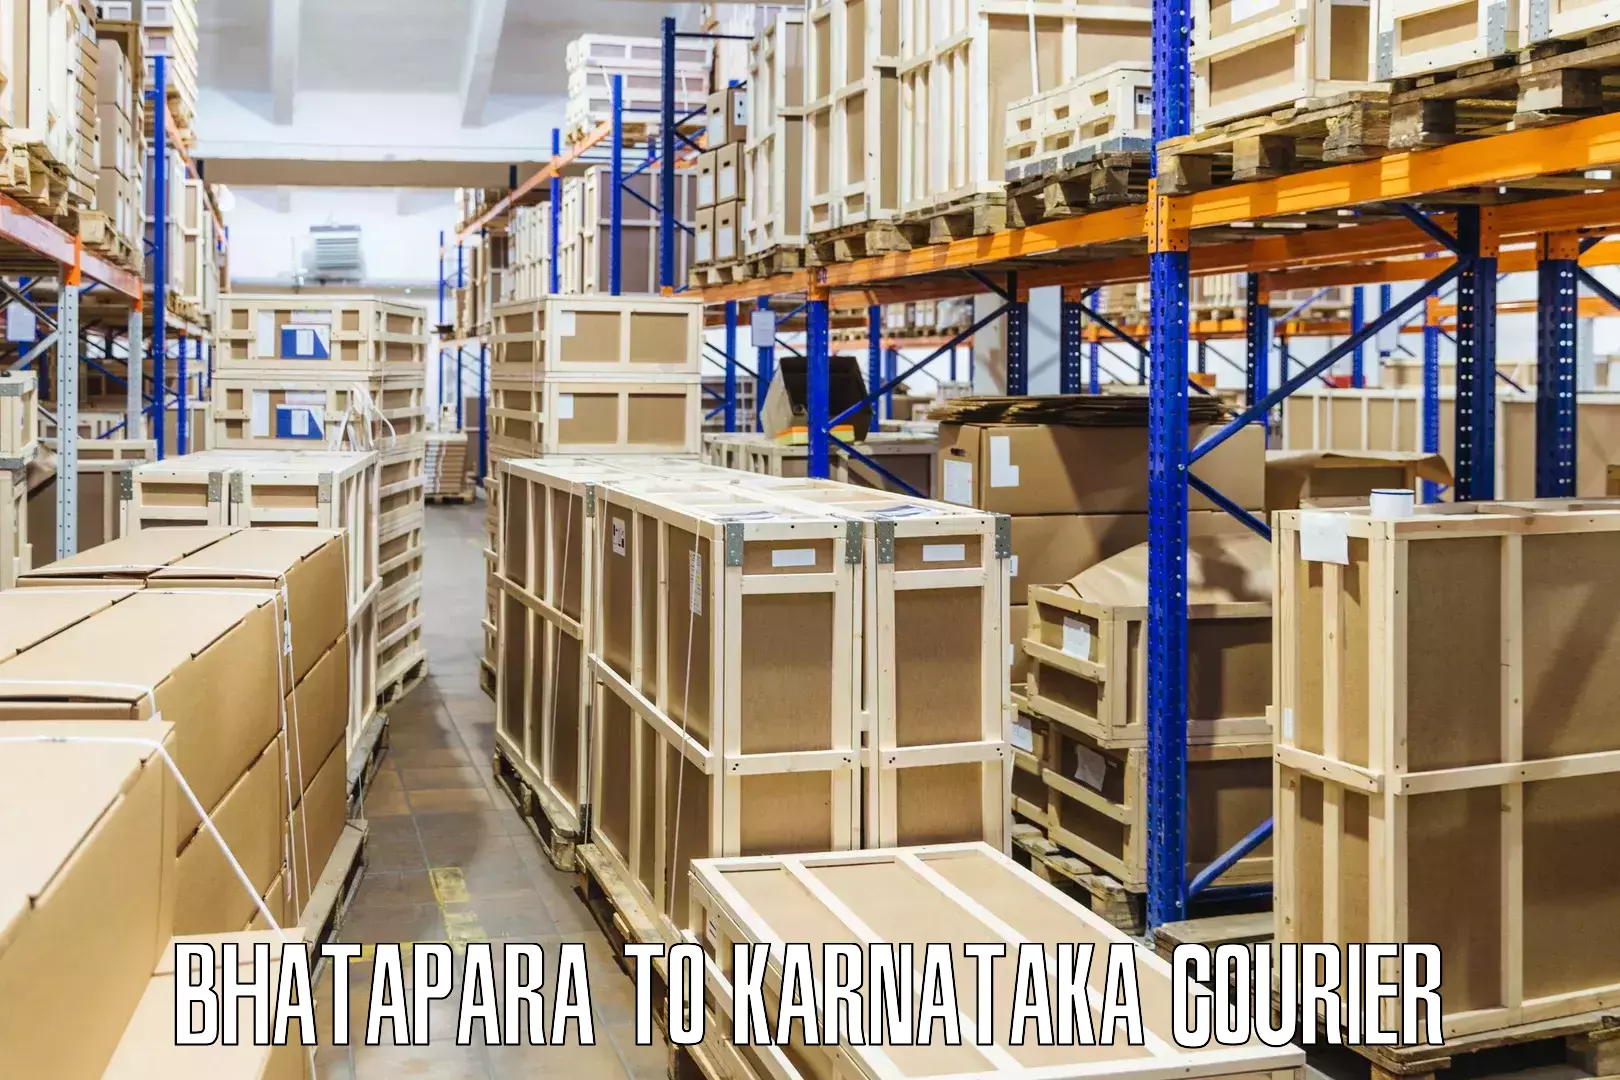 Courier service partnerships Bhatapara to Surathkal